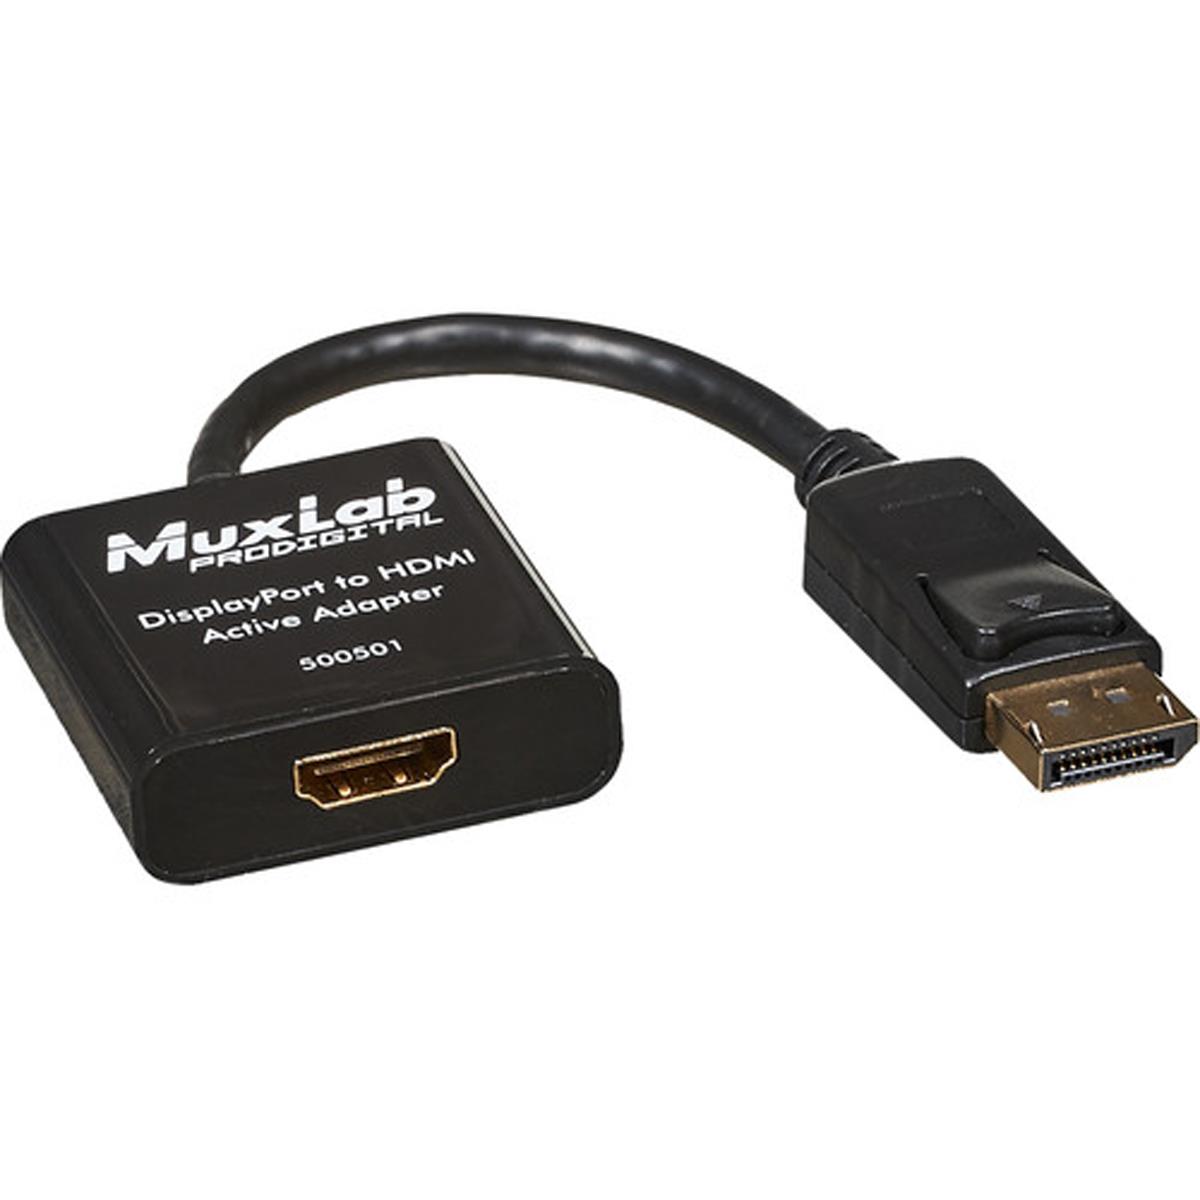 Image of Muxlab MuxLab DisplayPort to HDMI Active Adapter